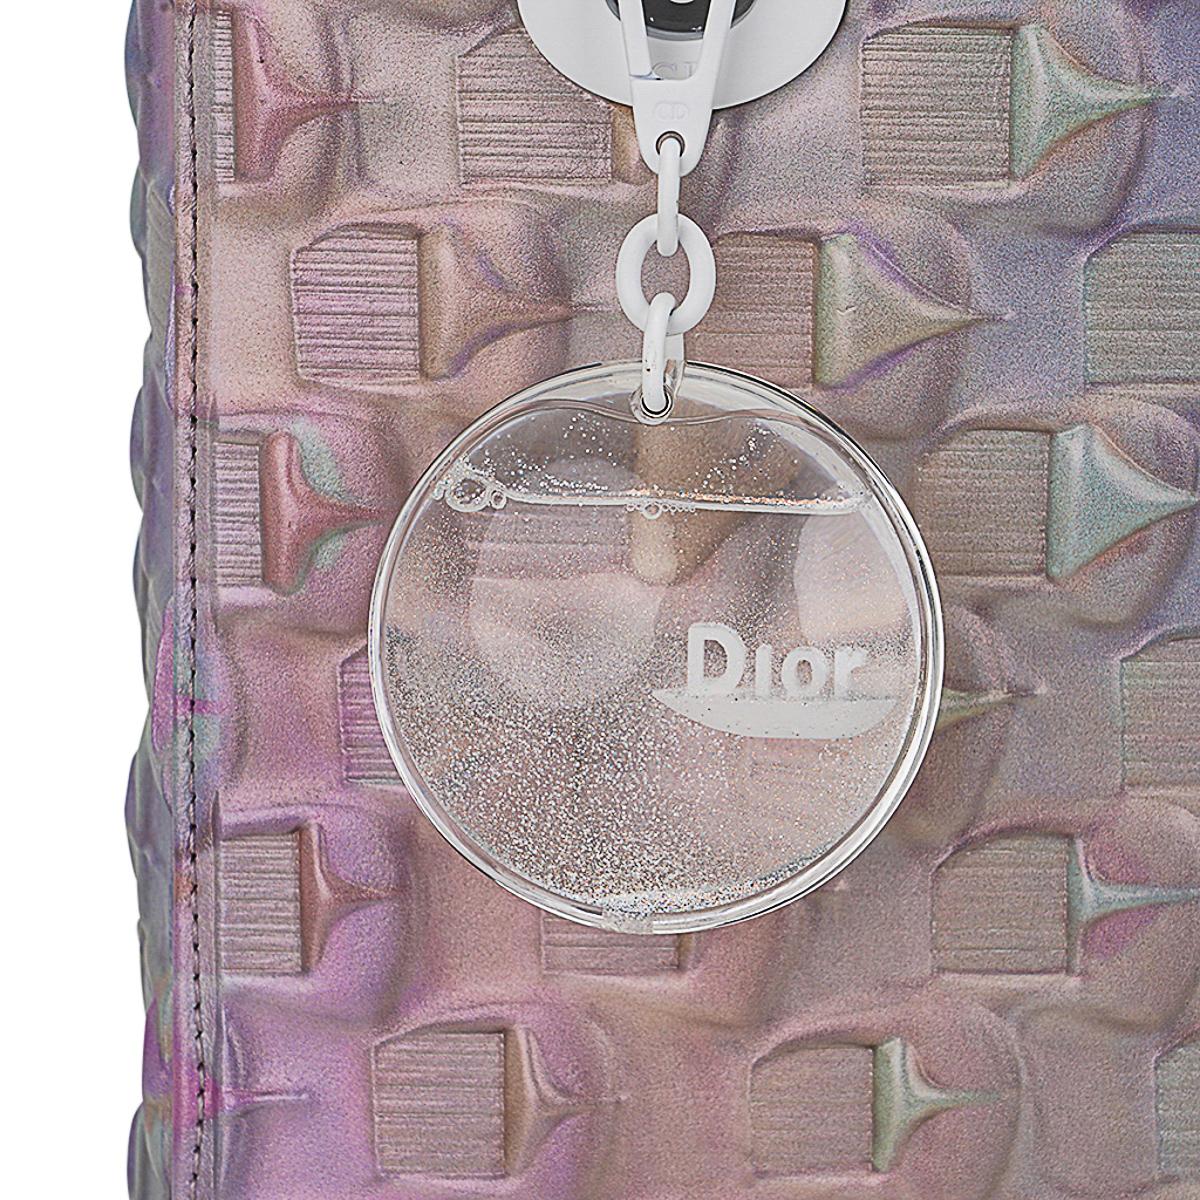 Sac d'art Dior Lady Dior #6 Pastels irisé de Daisuke Ohba 6